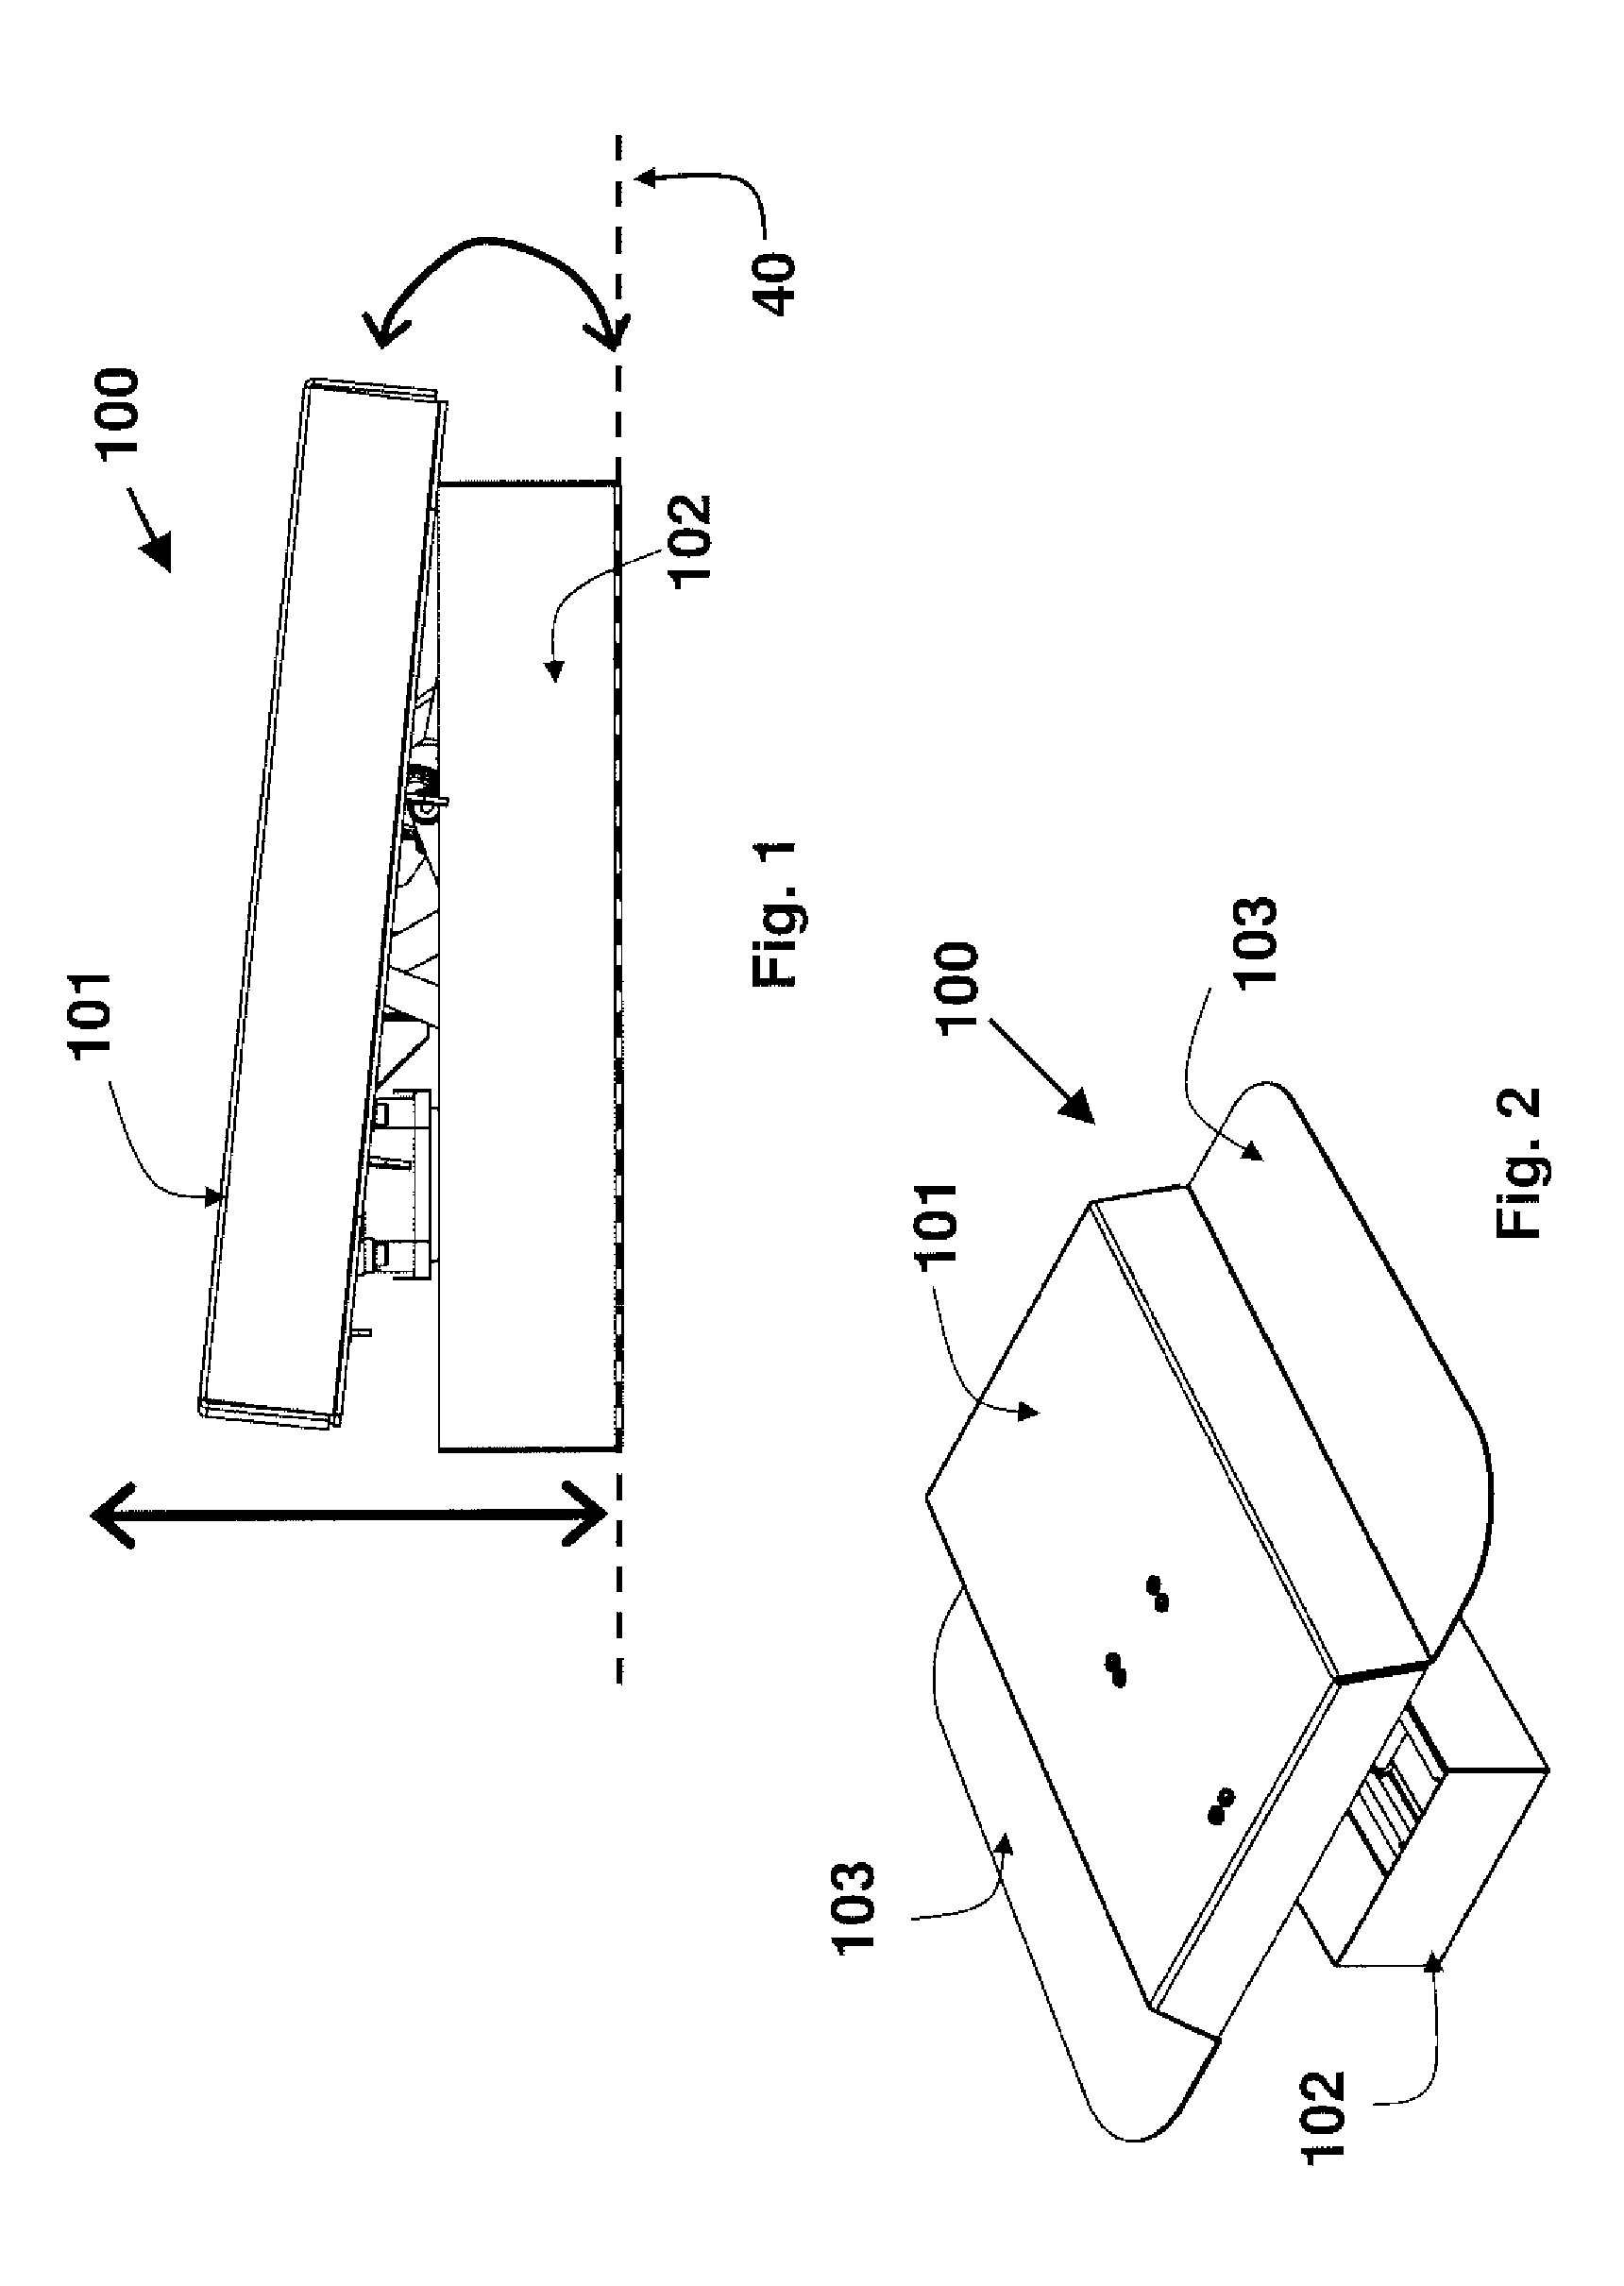 Oscillating feet supporting apparatus